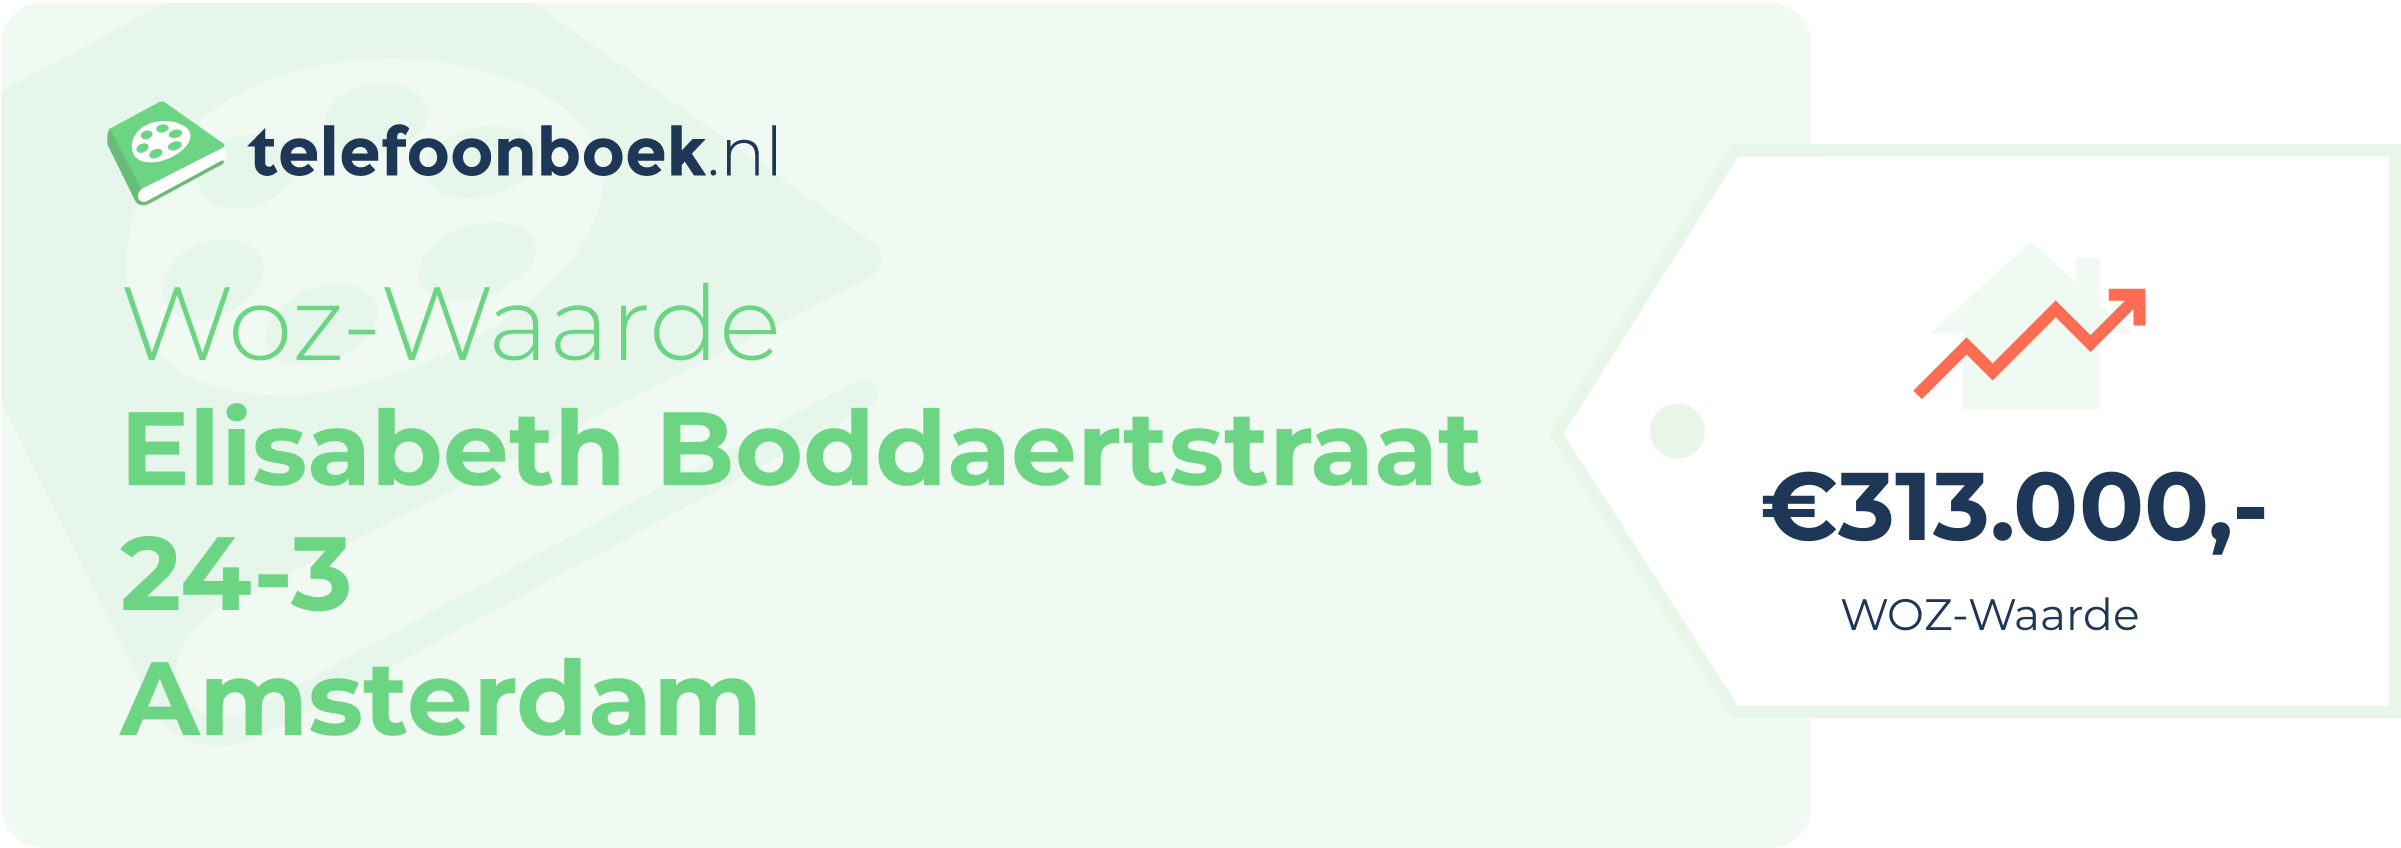 WOZ-waarde Elisabeth Boddaertstraat 24-3 Amsterdam